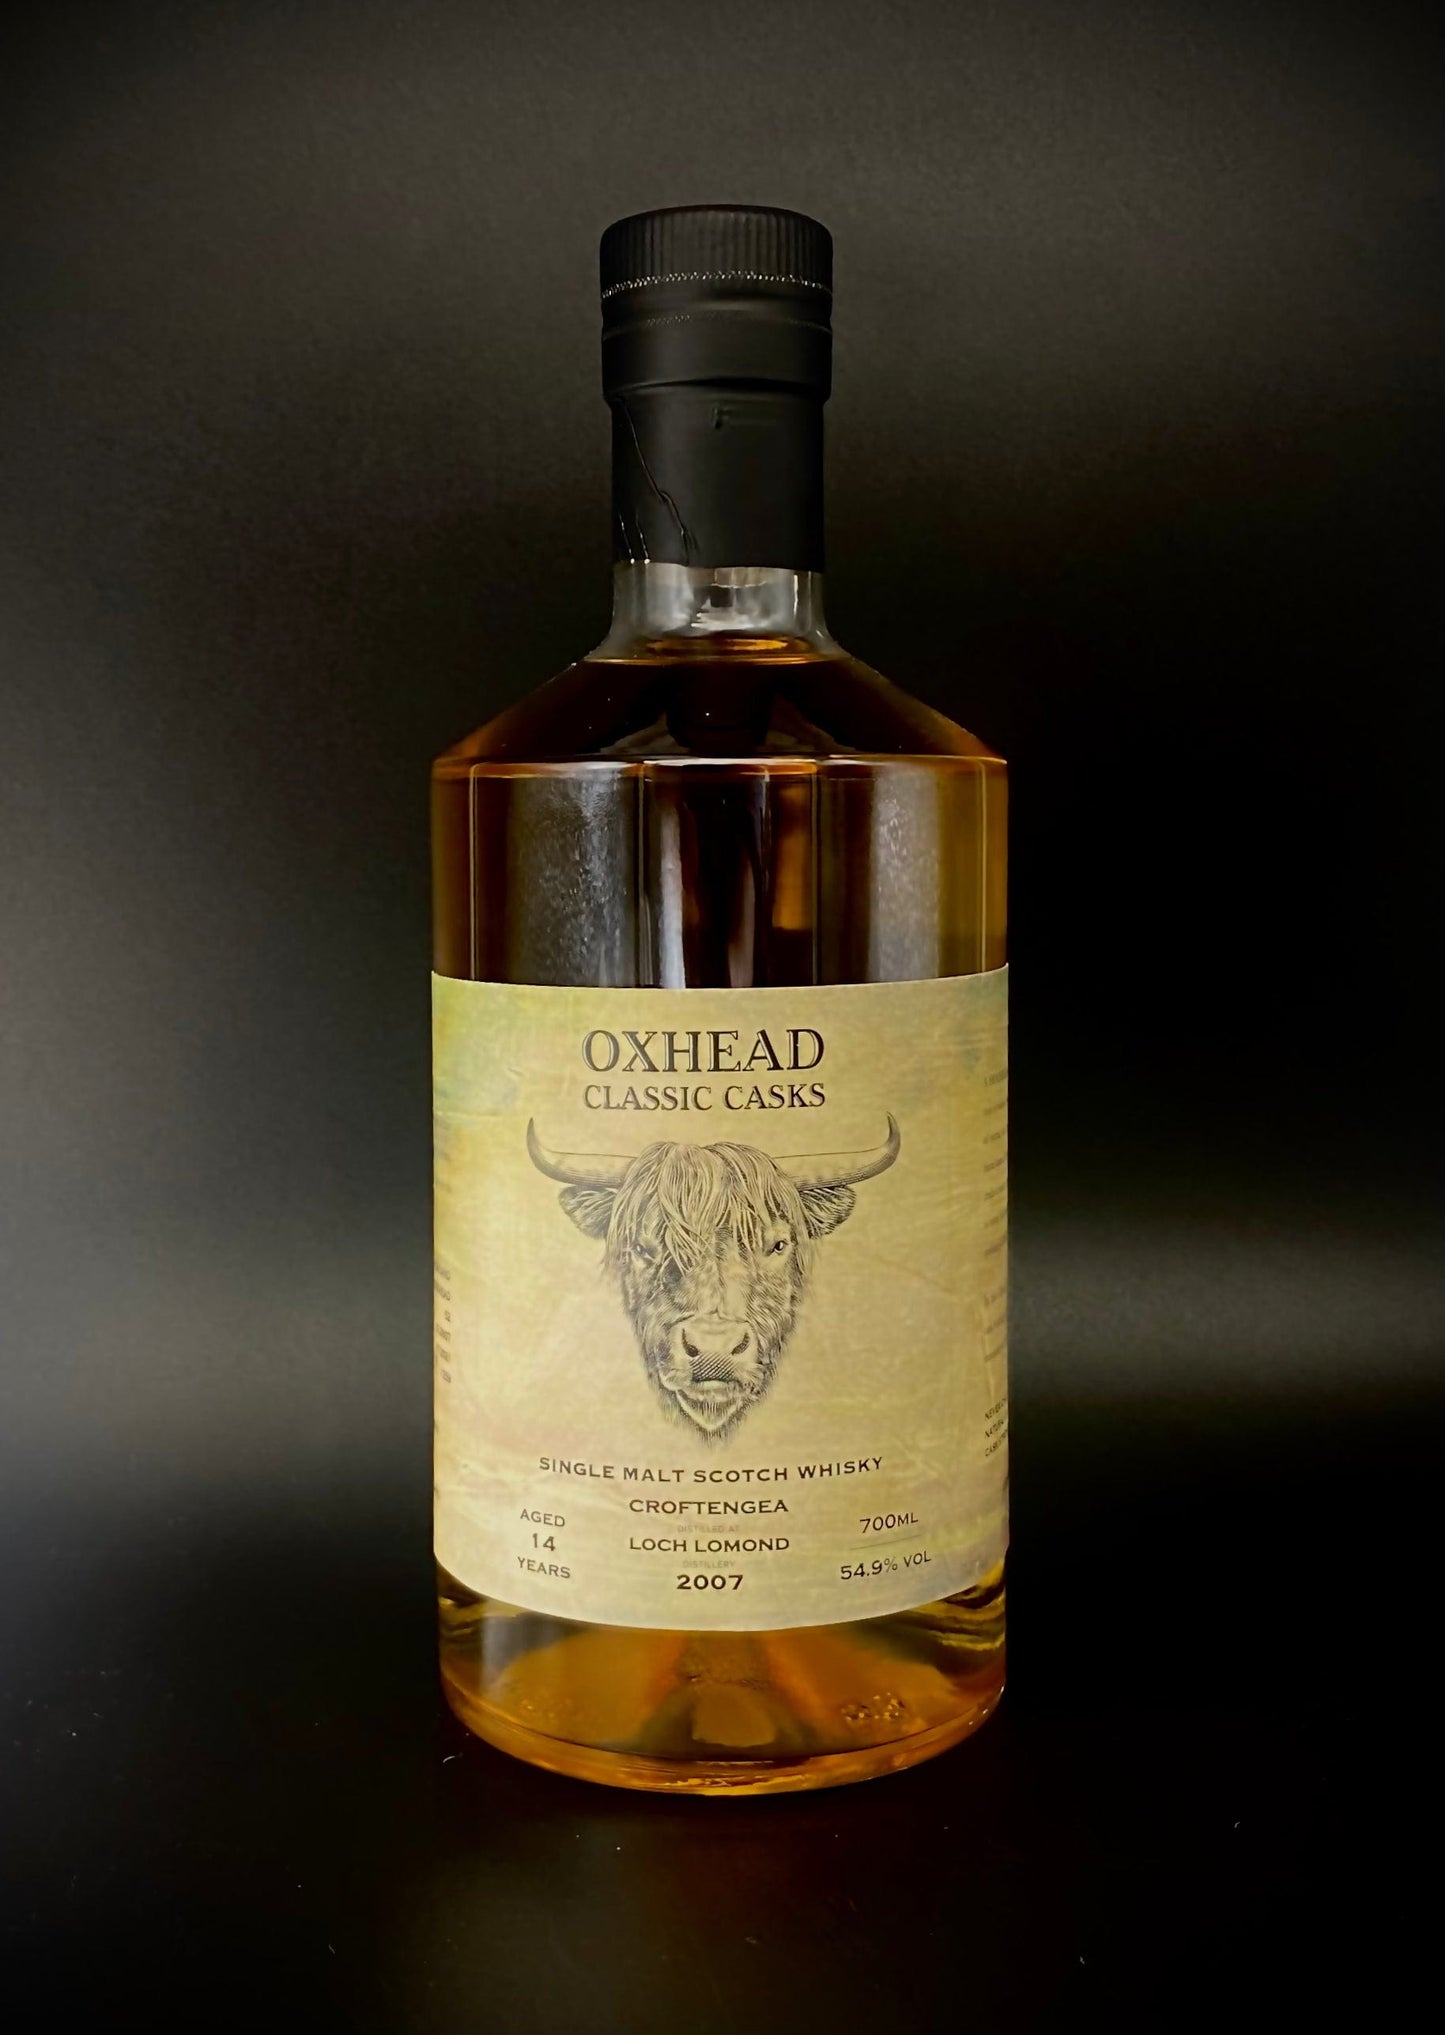 Horny Pony  Croftengea (Loch Lomond) 14y/o Oxhead Whisky 54.9%ABV 30ml